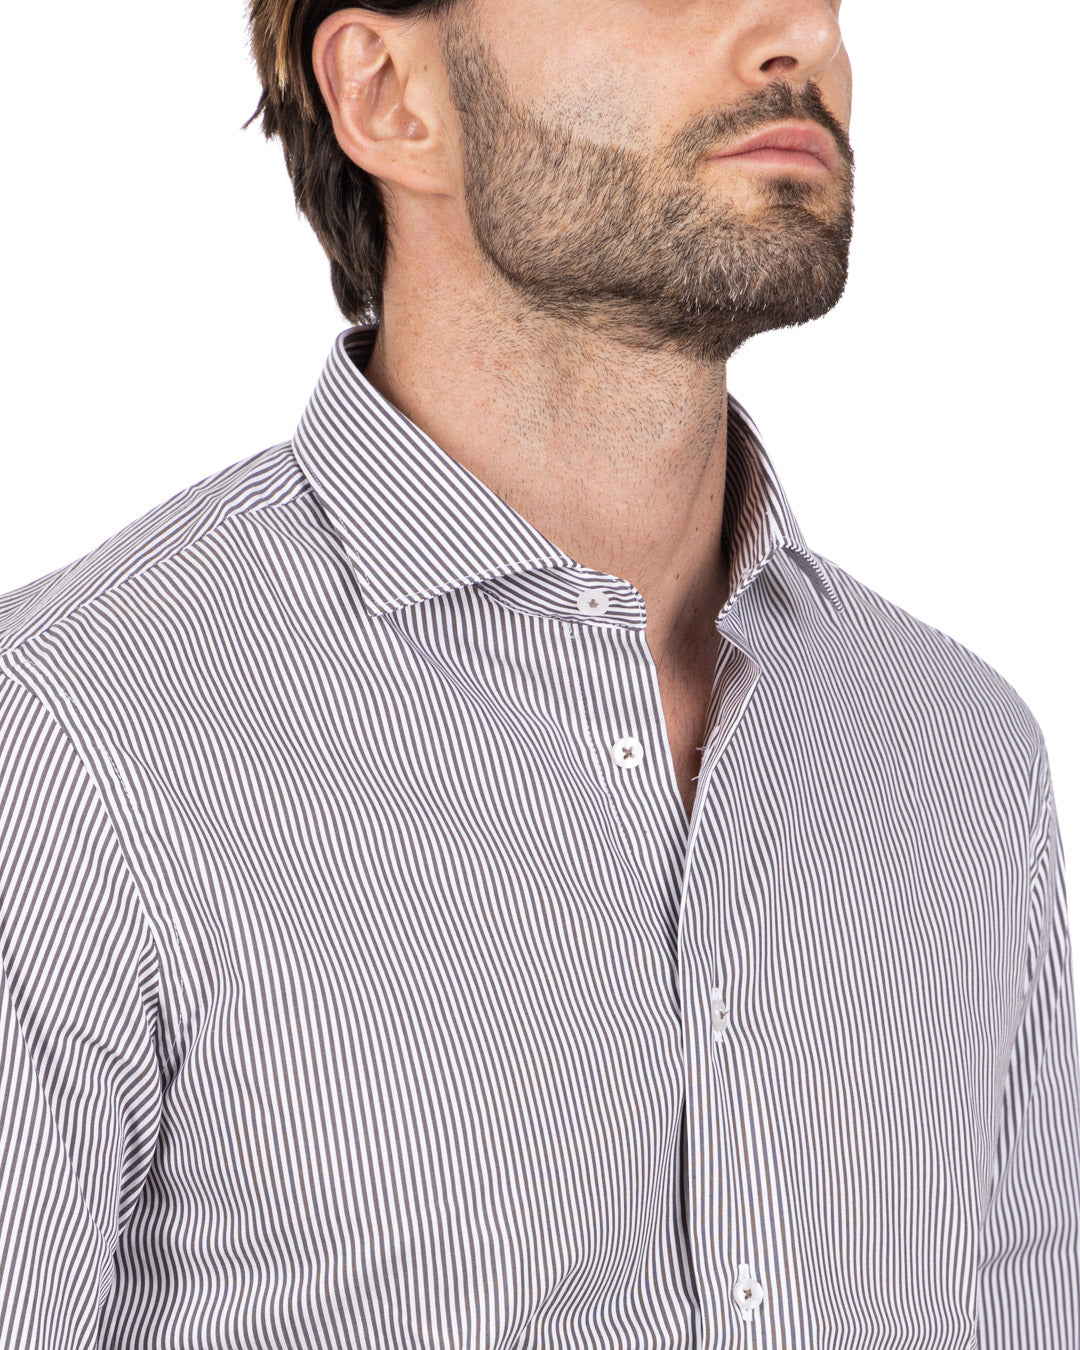 Shirt - classic basic black narrow stripe in cotton